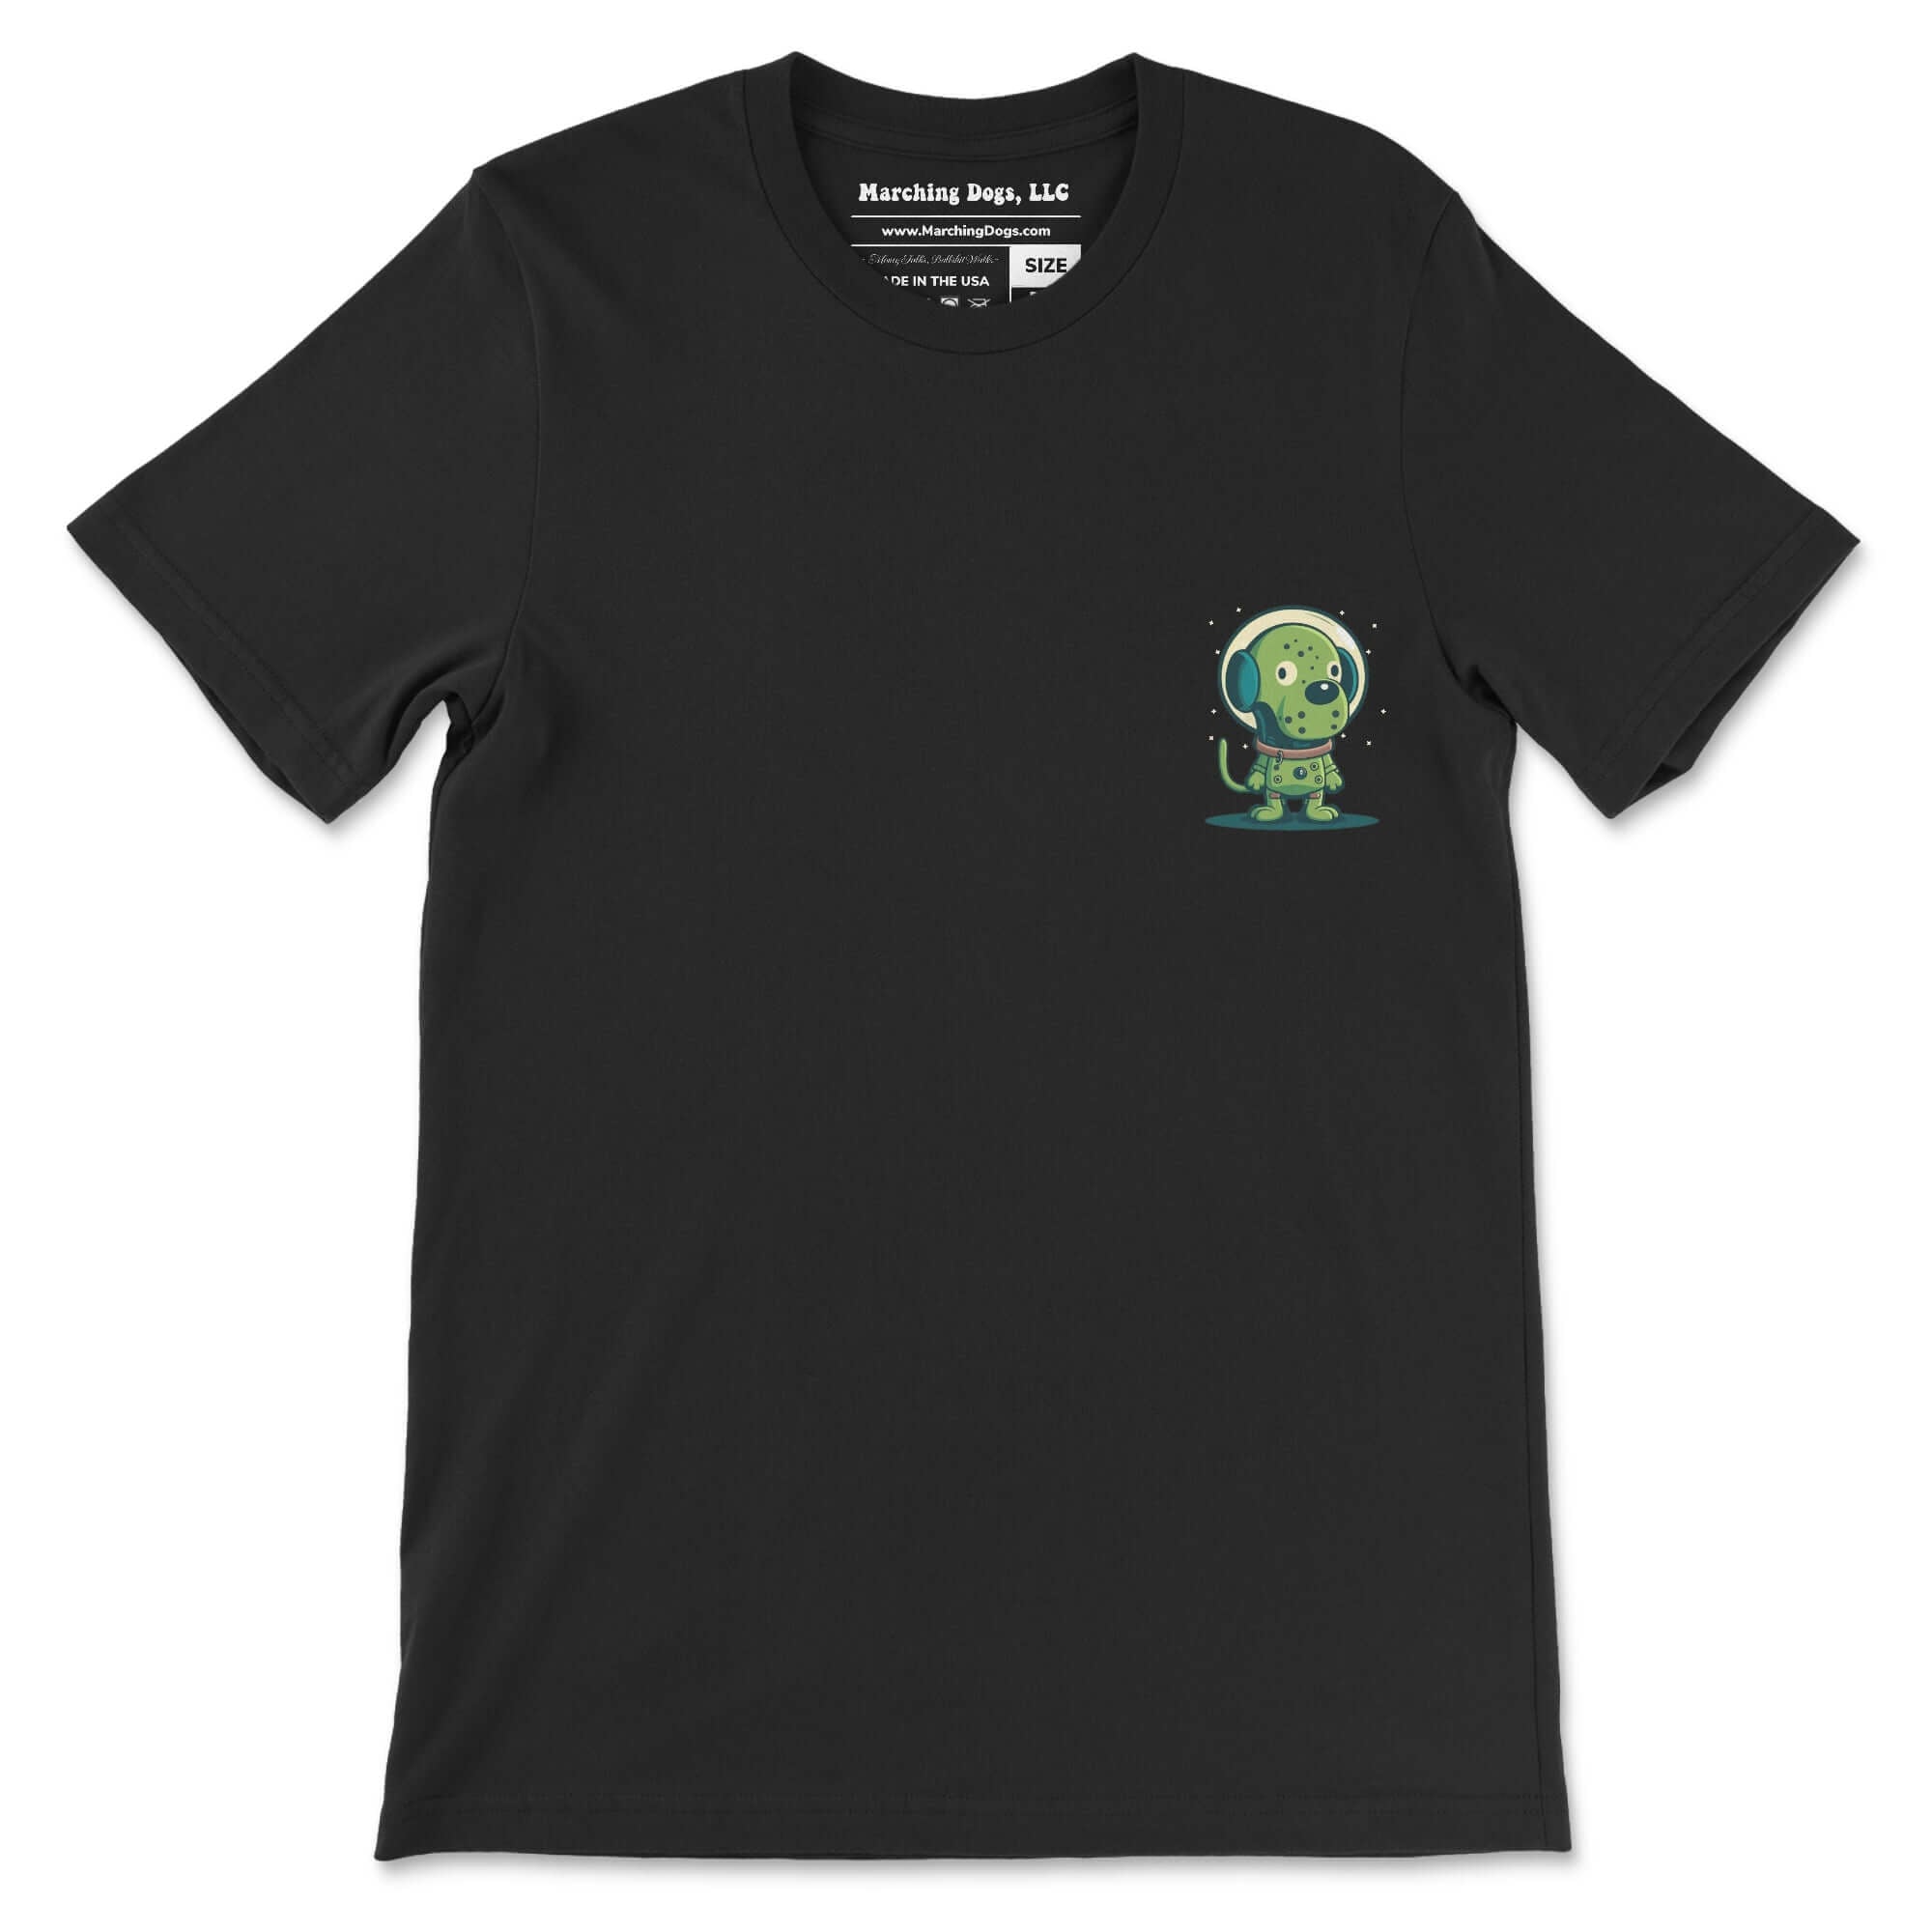 'Alien Dog' Pocket T-Shirt